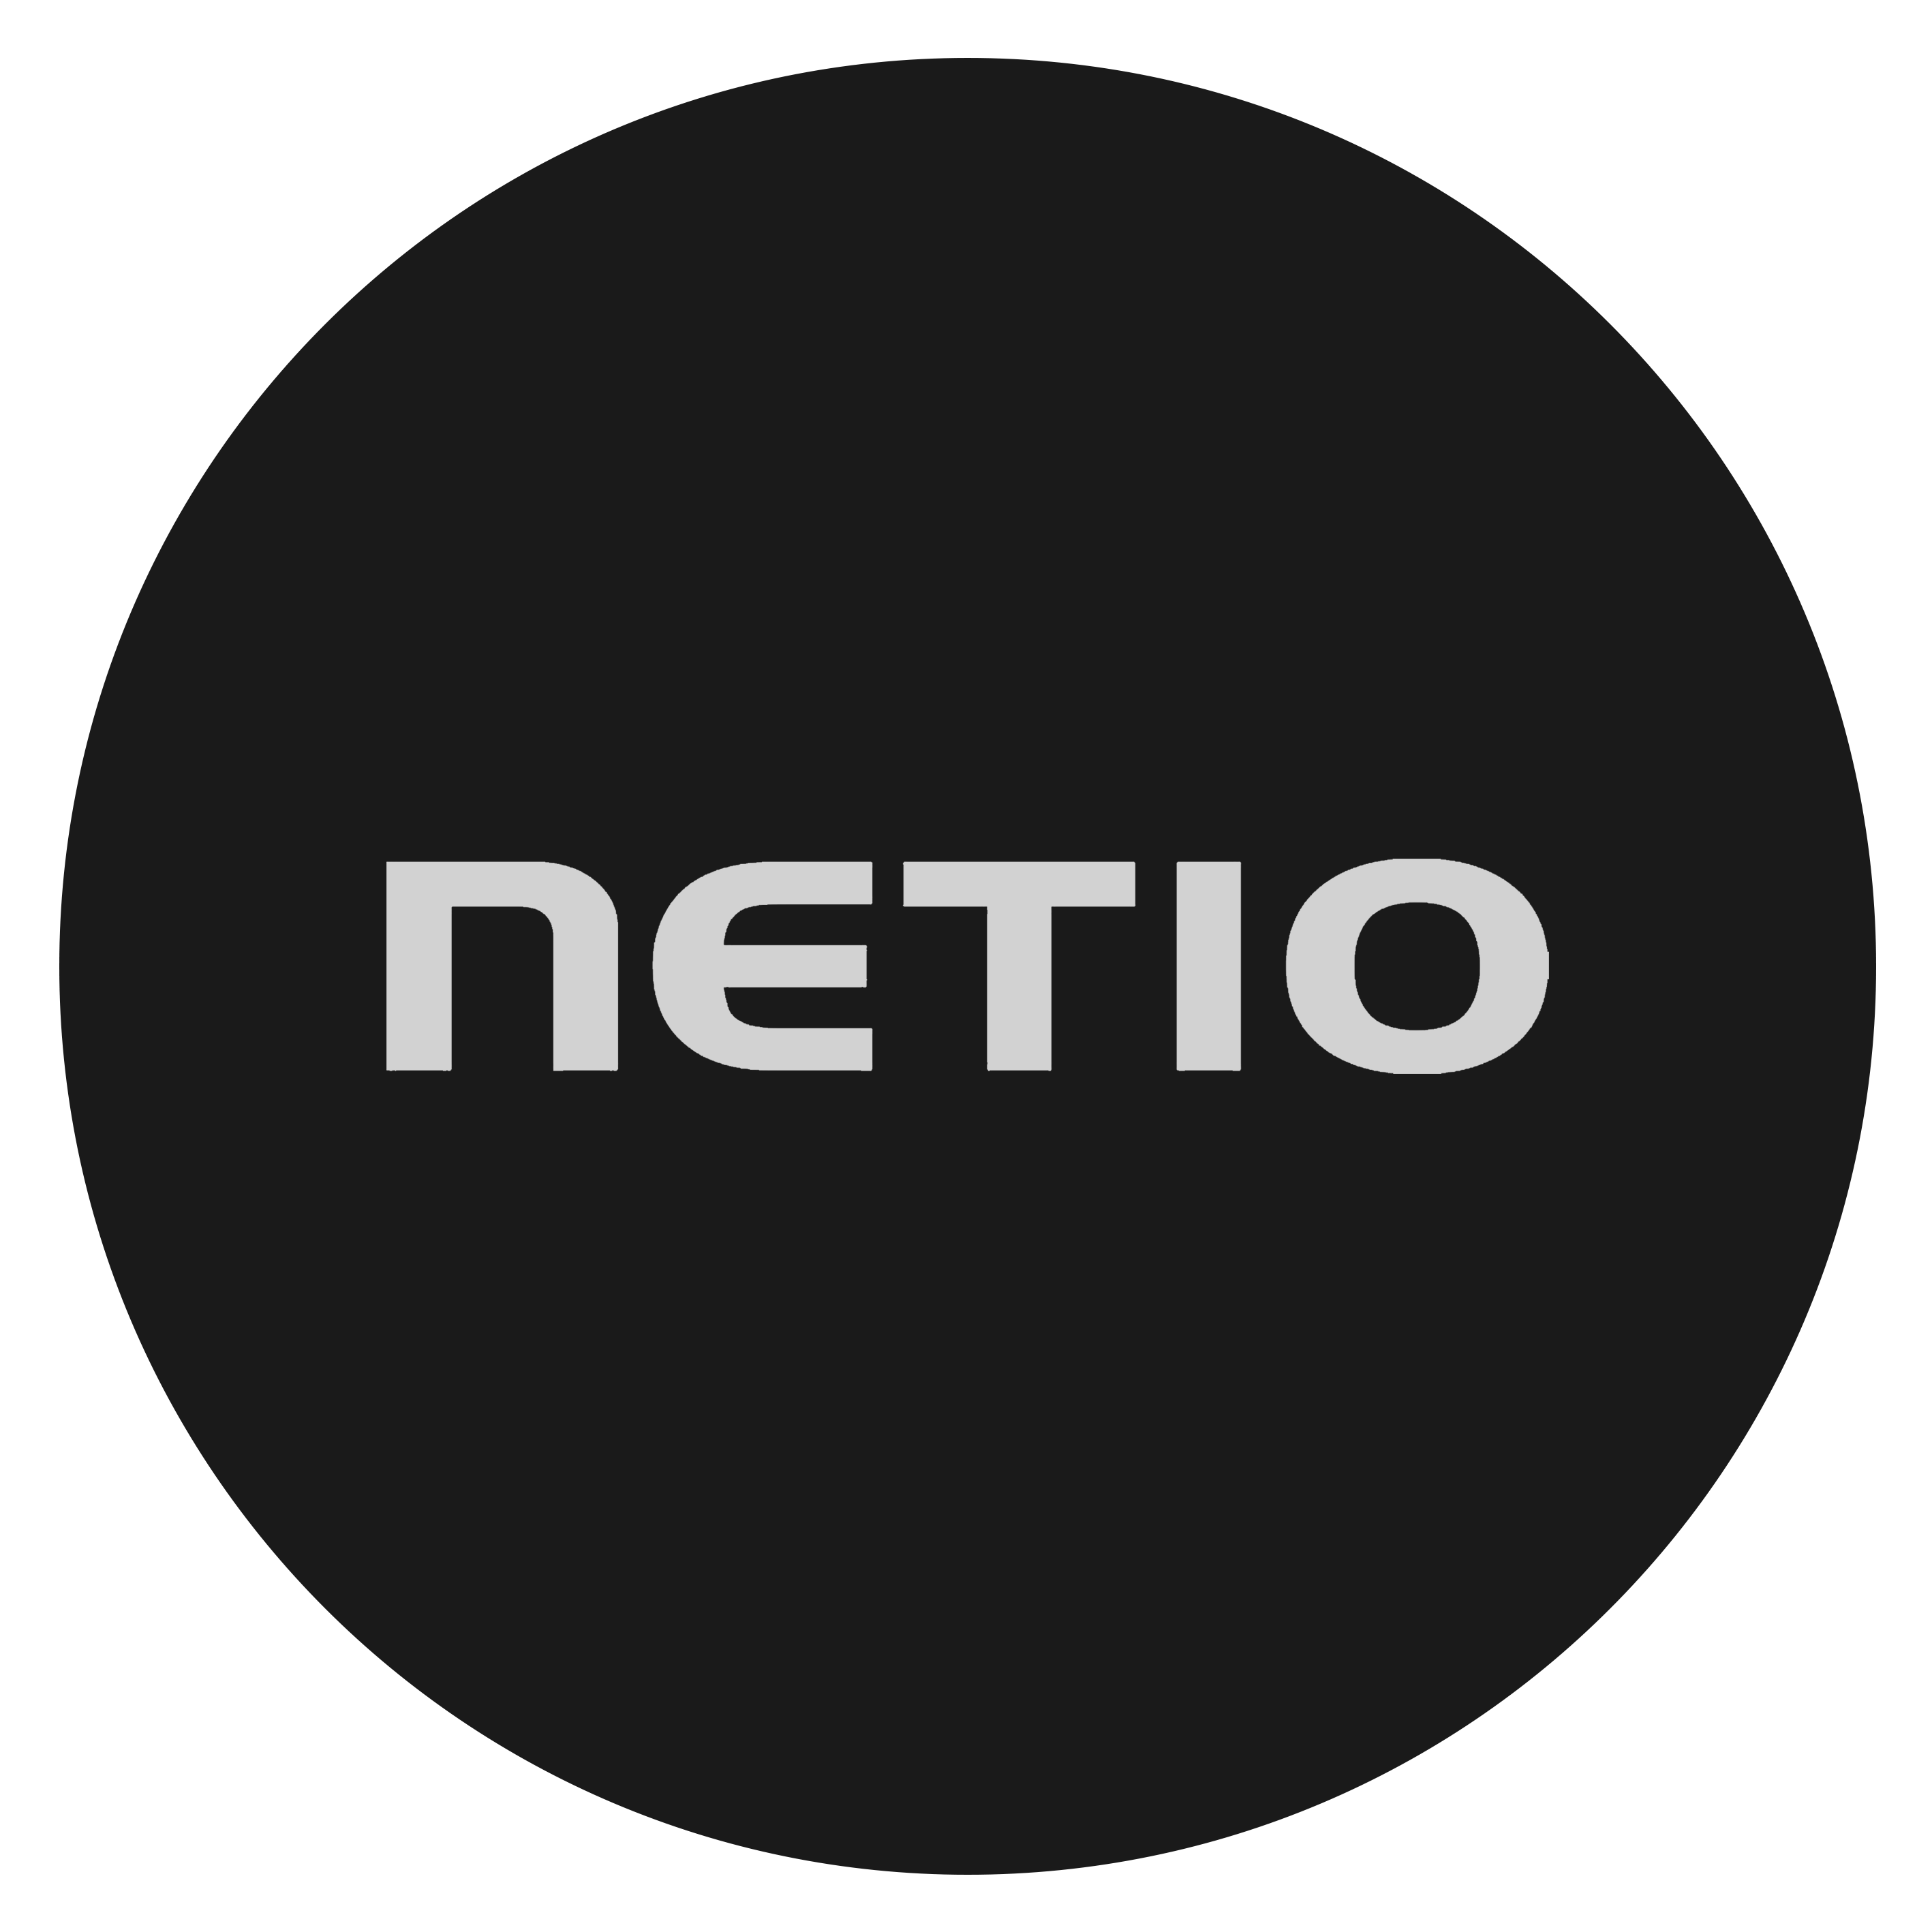 Netio power control in uOS